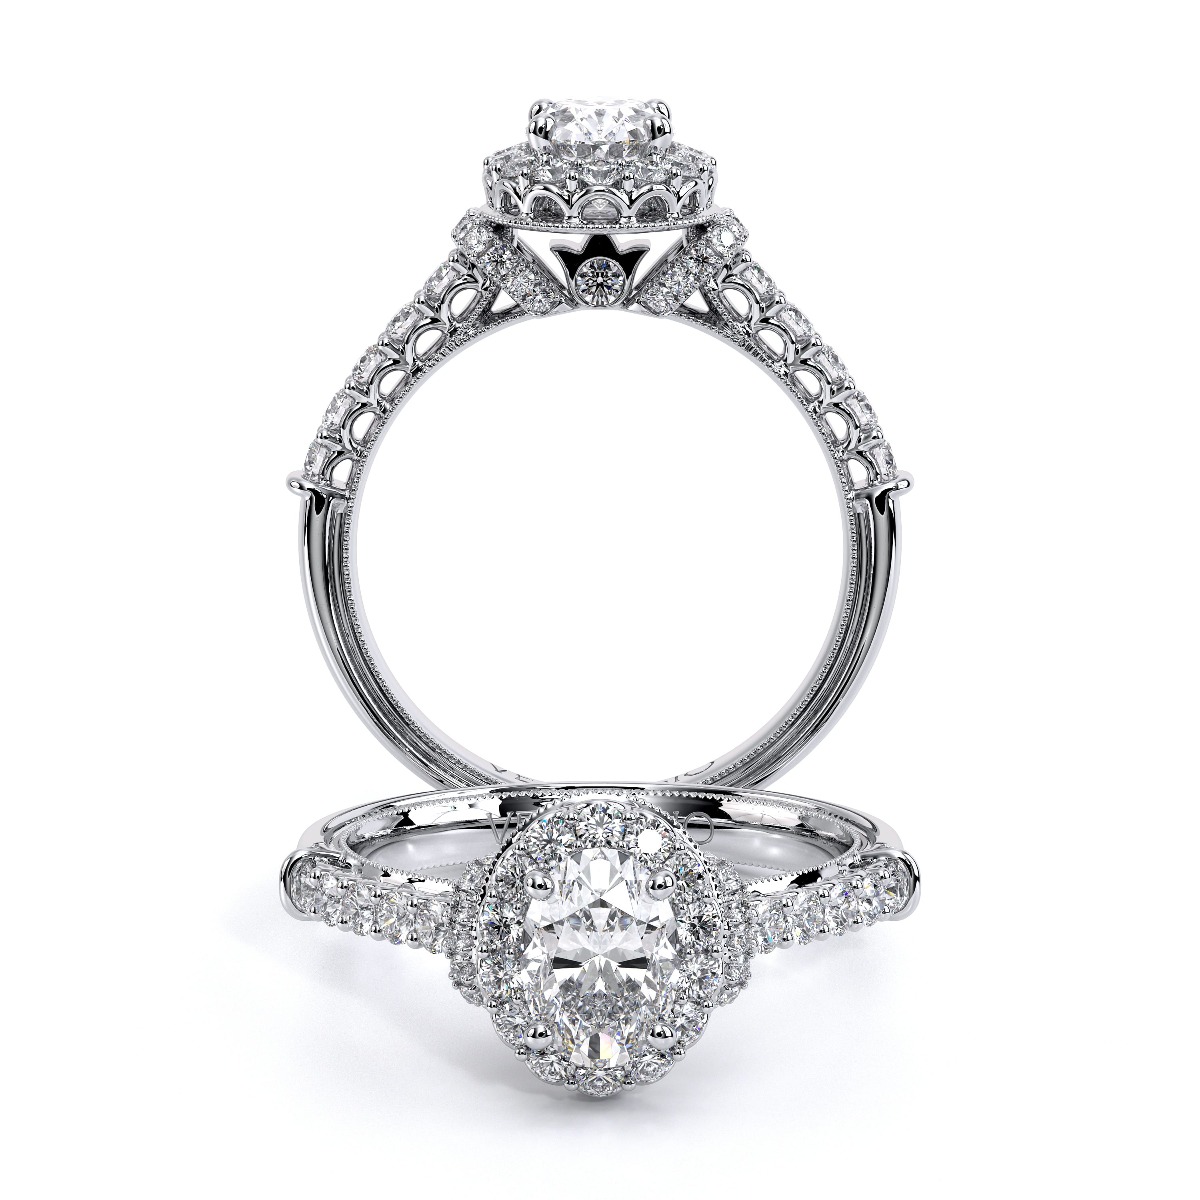 Verragio Renaissance Diamond Engagement Ring - White gold